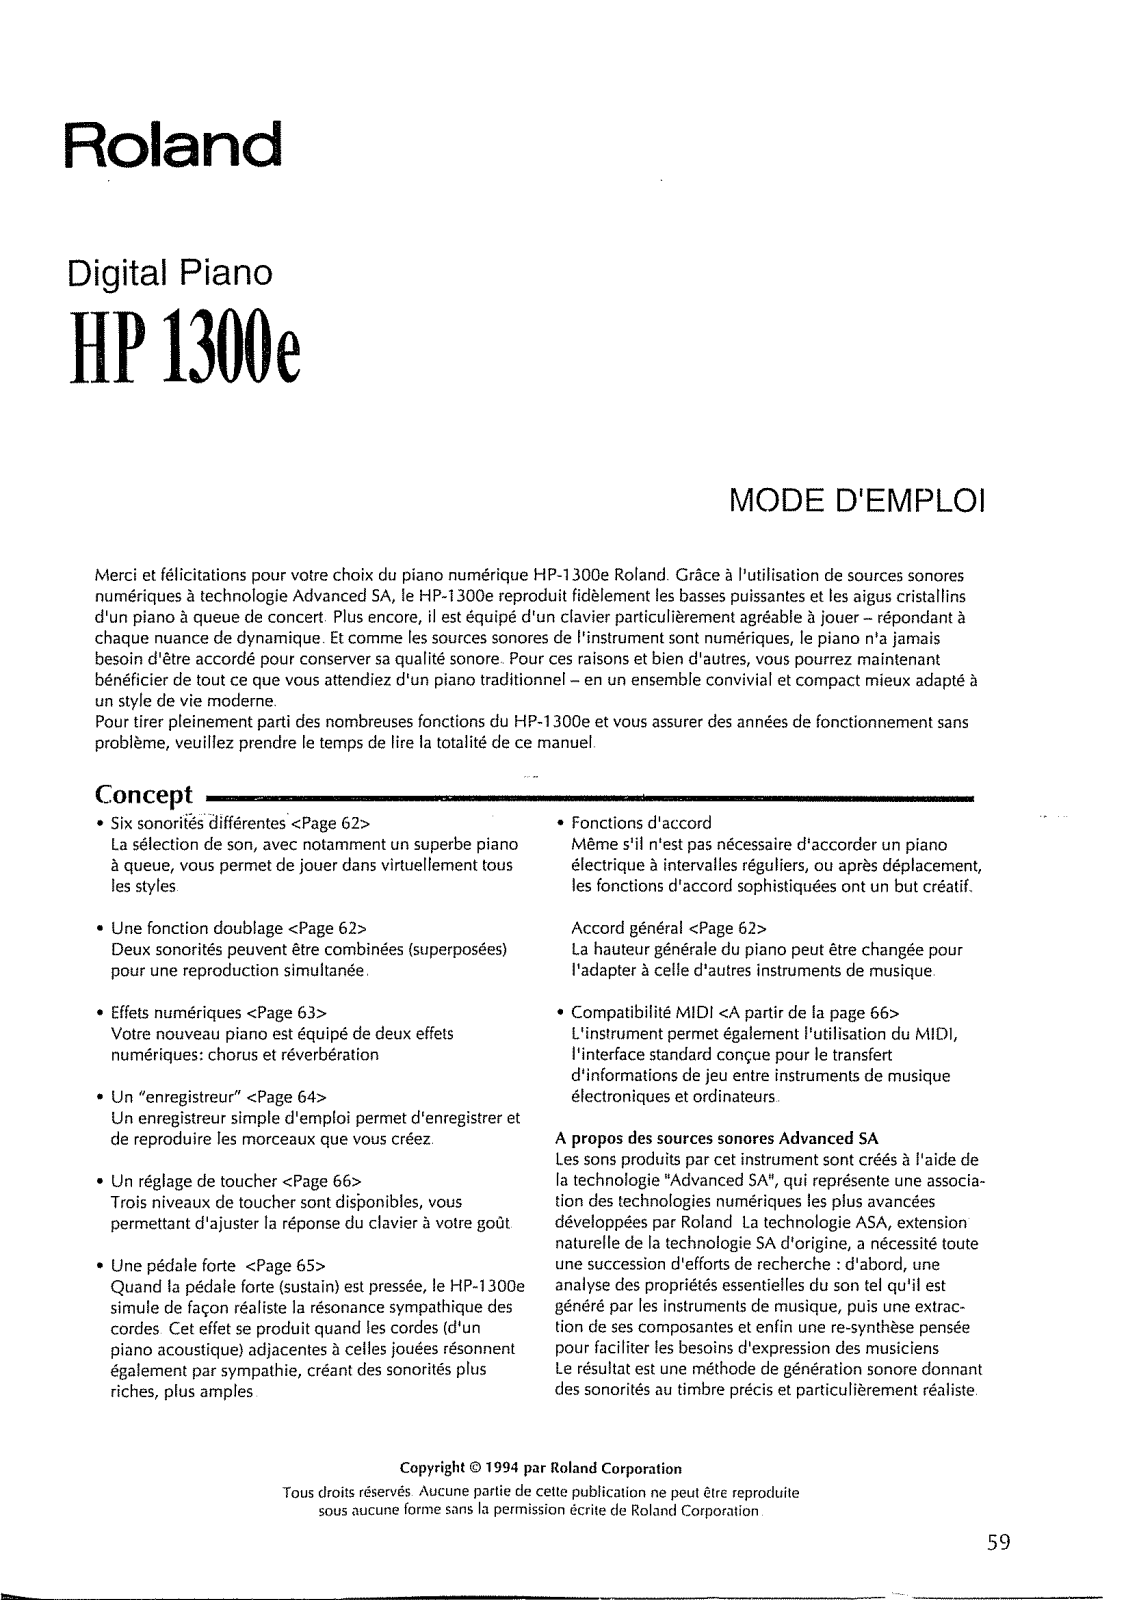 Roland HP-1300E Manual